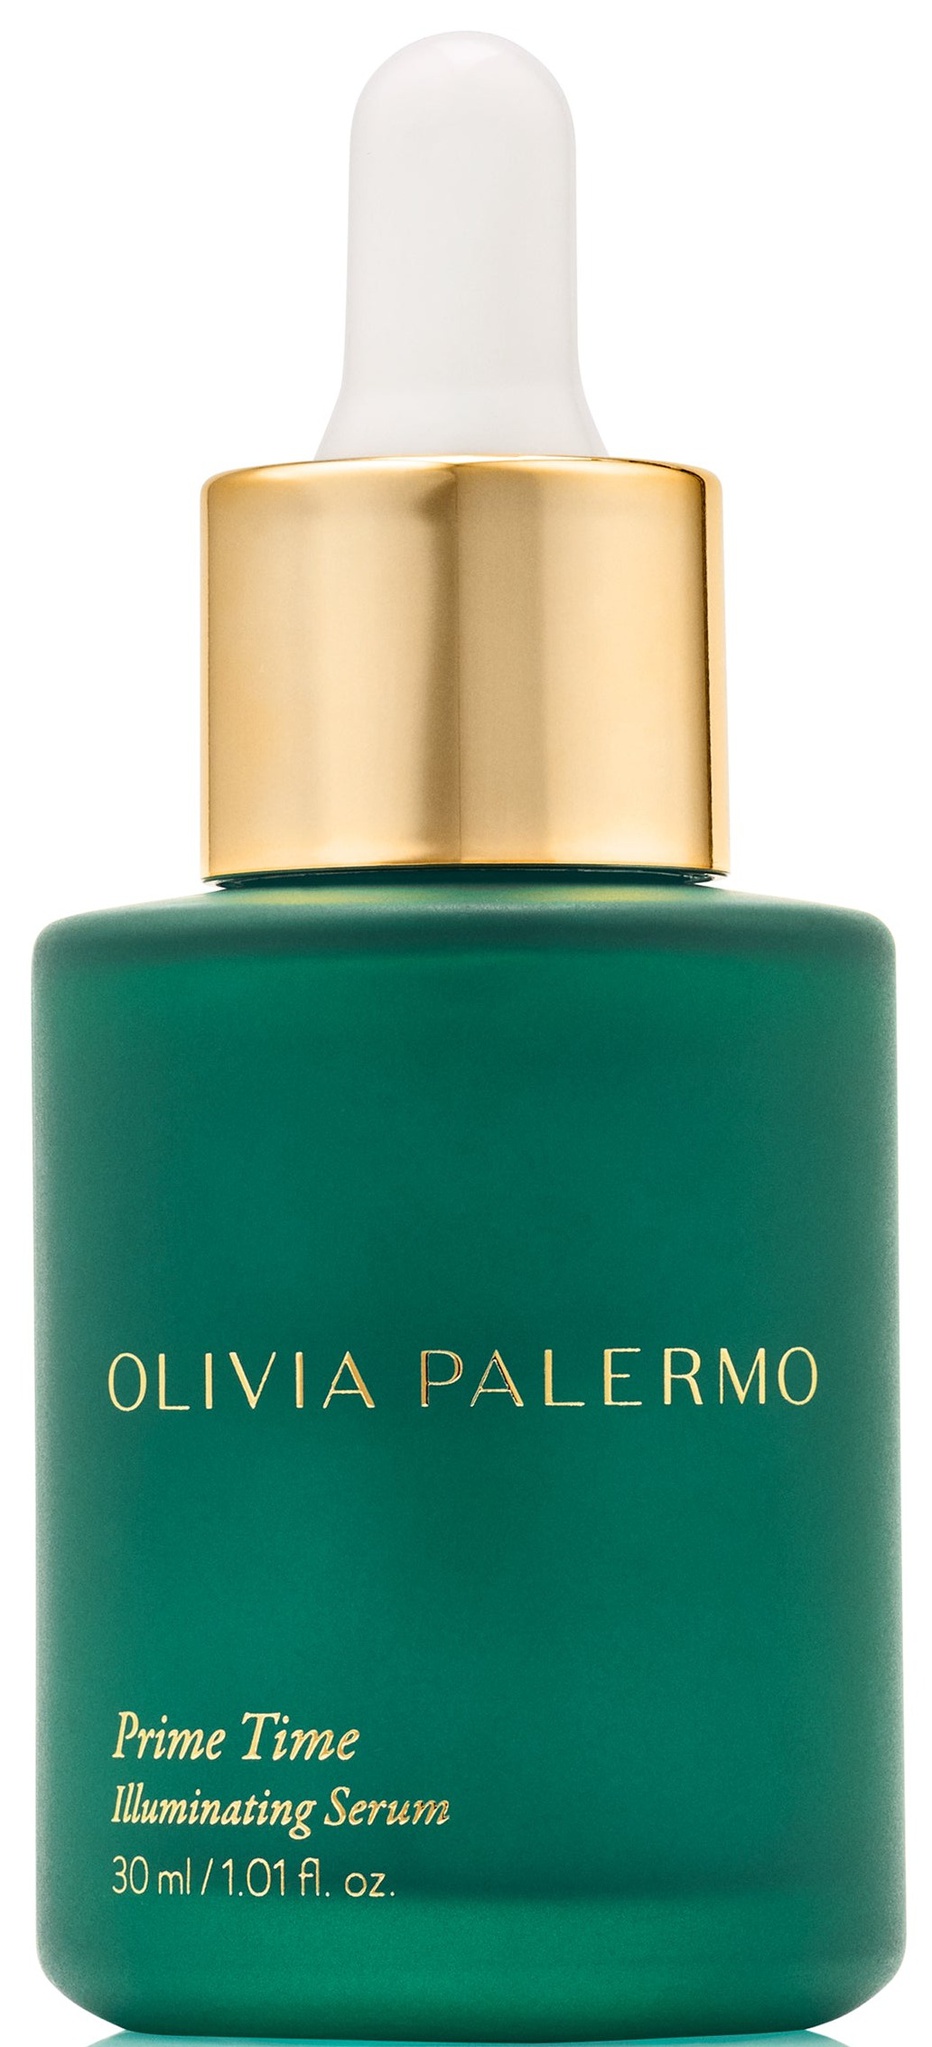 olivia palermo Prime Time Illuminating Serum